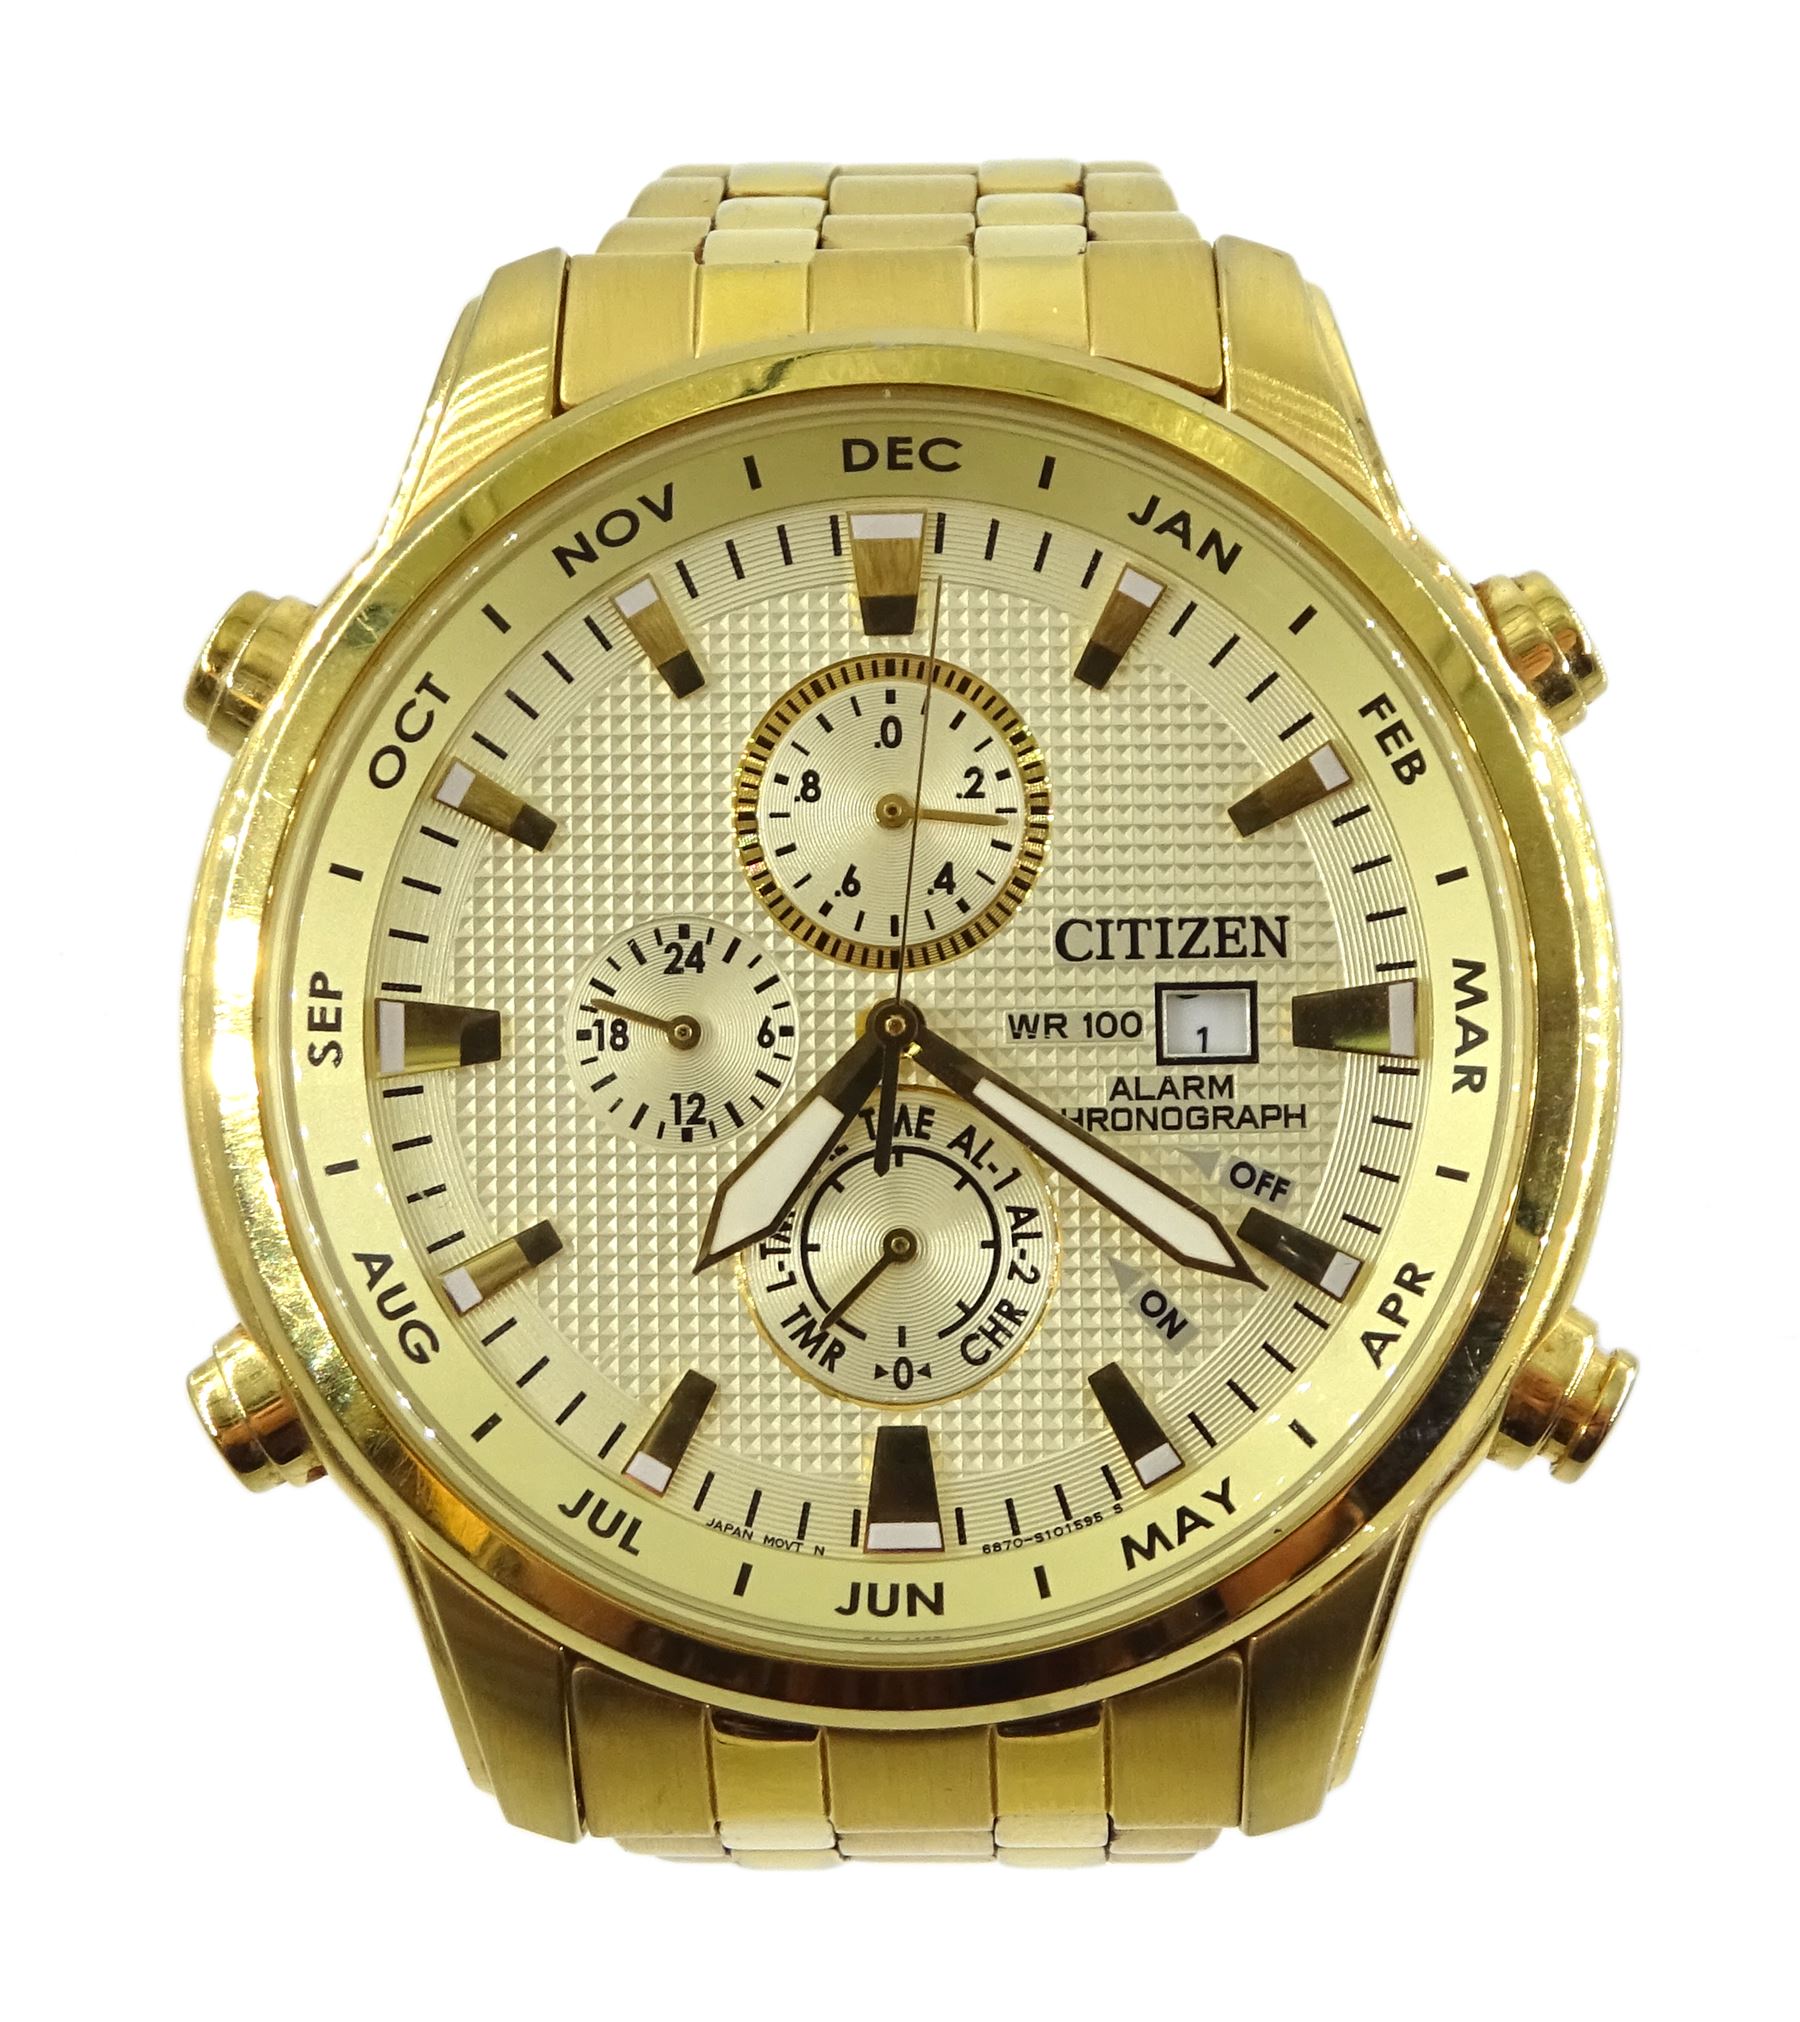 Citizen Alarm Chronograph gentleman's gold-plated bracelet wristwatch